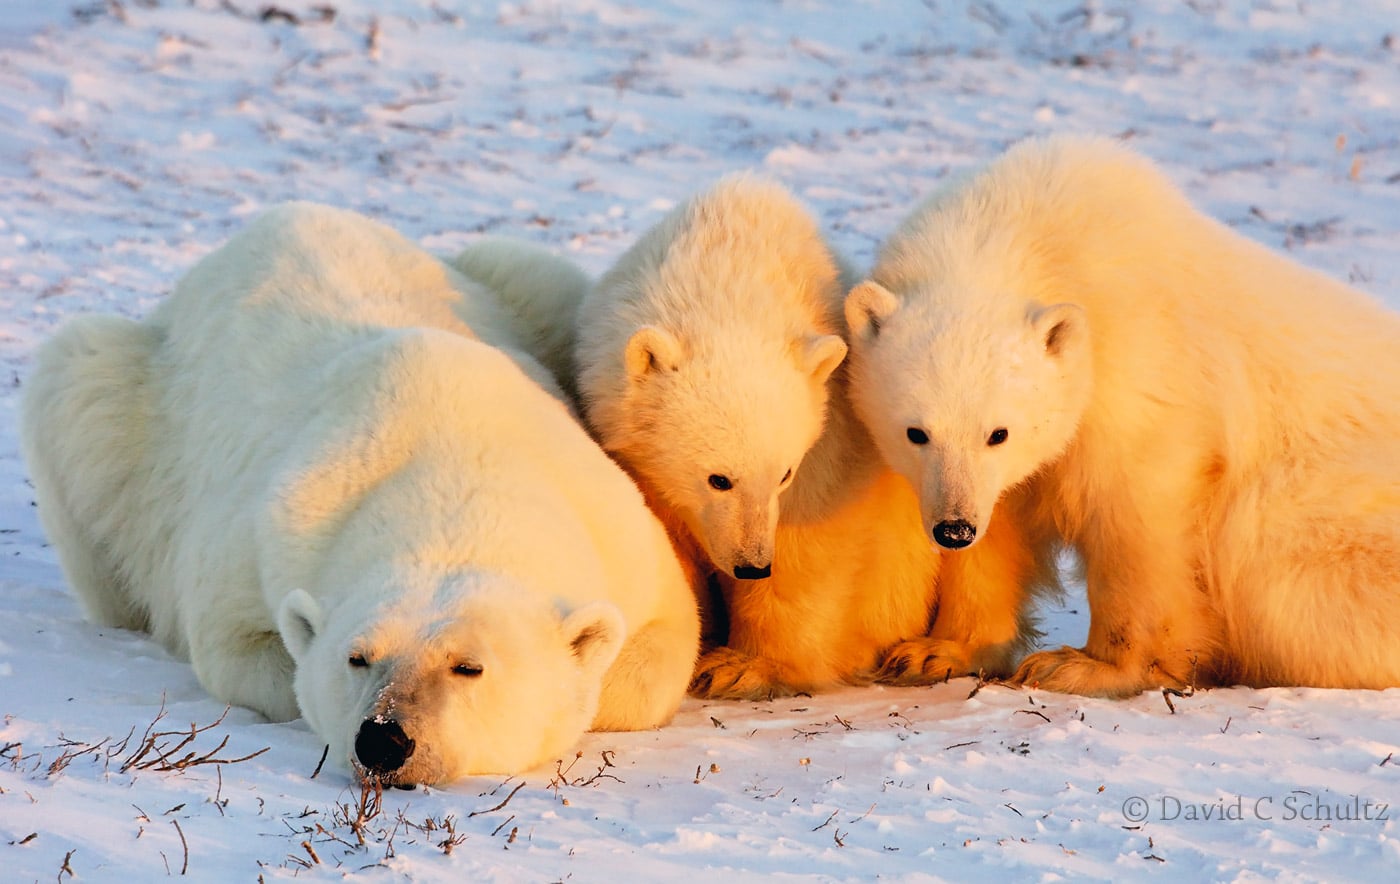 Polar bear cubs, Canada - Image #168-884